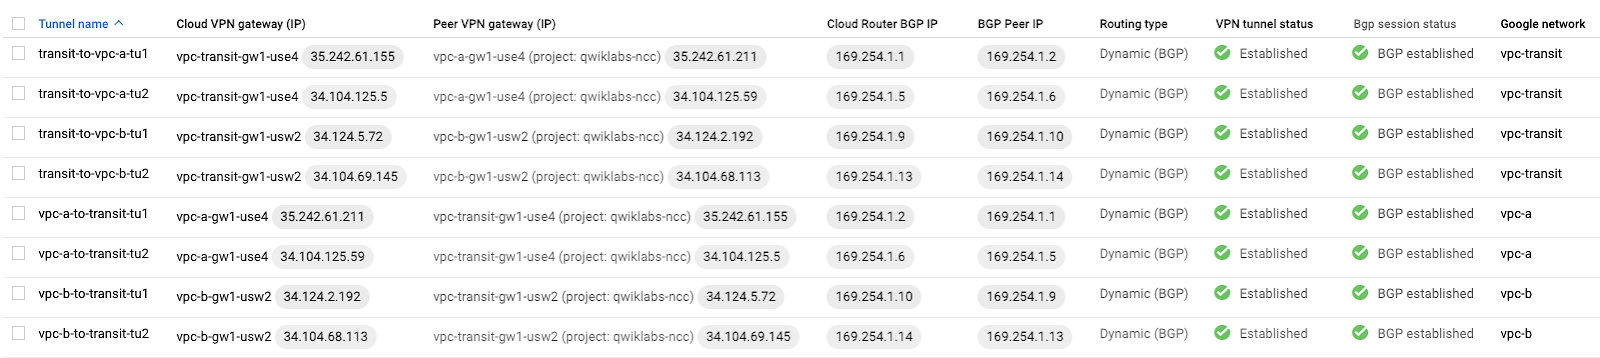 VPN page with all VPN tunnel statuses displaying Established and Bgp session statuses displaying BGP established